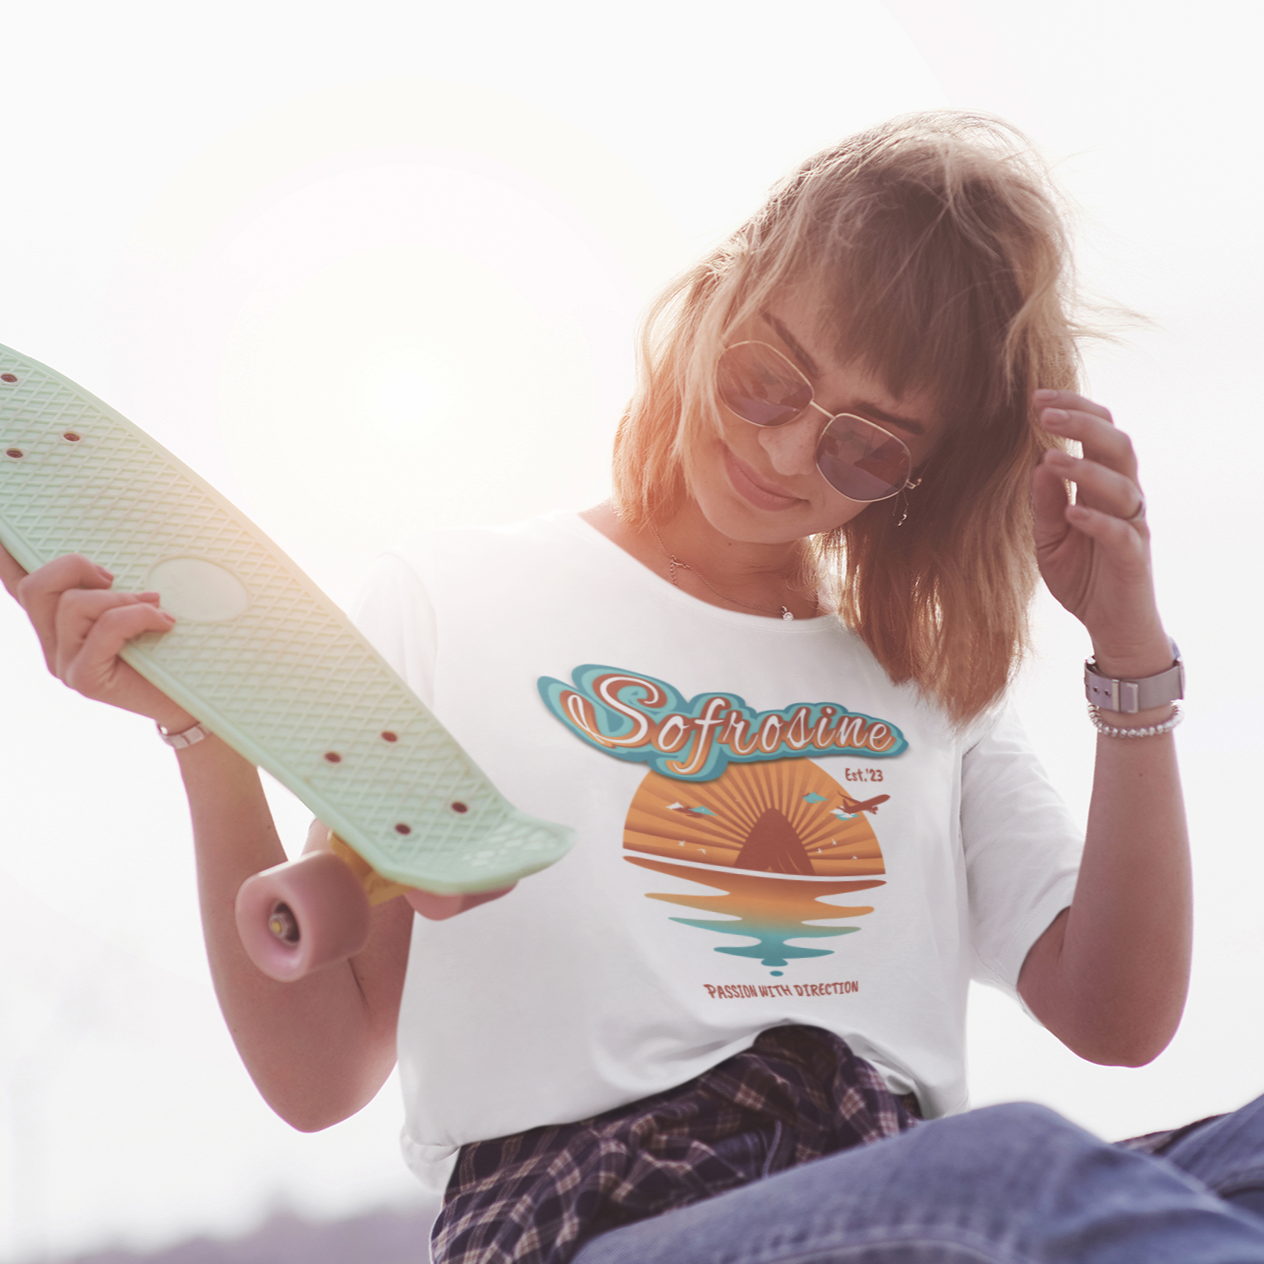 chica con patinete y camiseta sunset